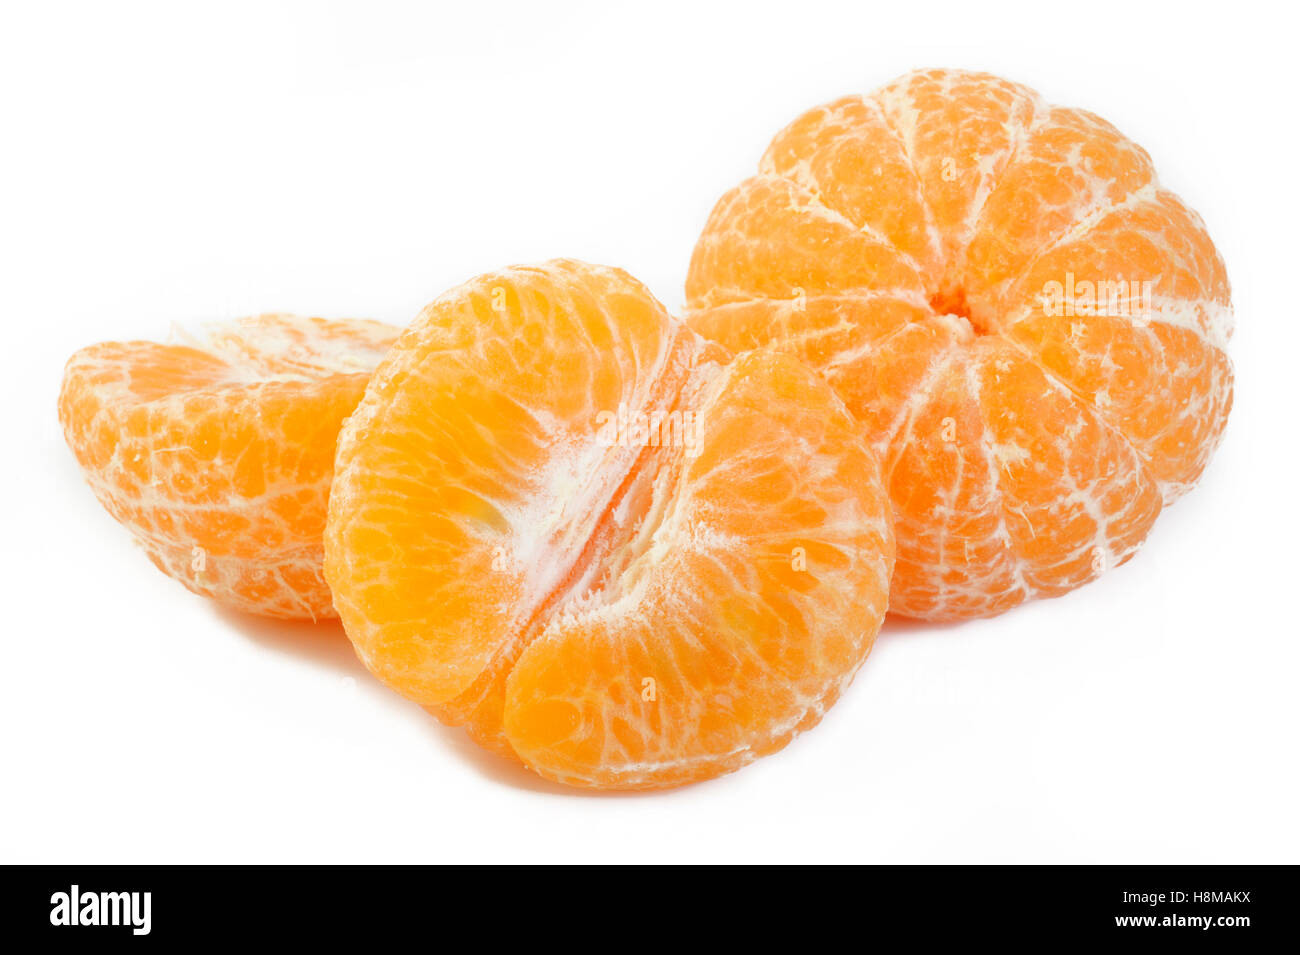 orange mandarin or tangerine fruit on white background Stock Photo